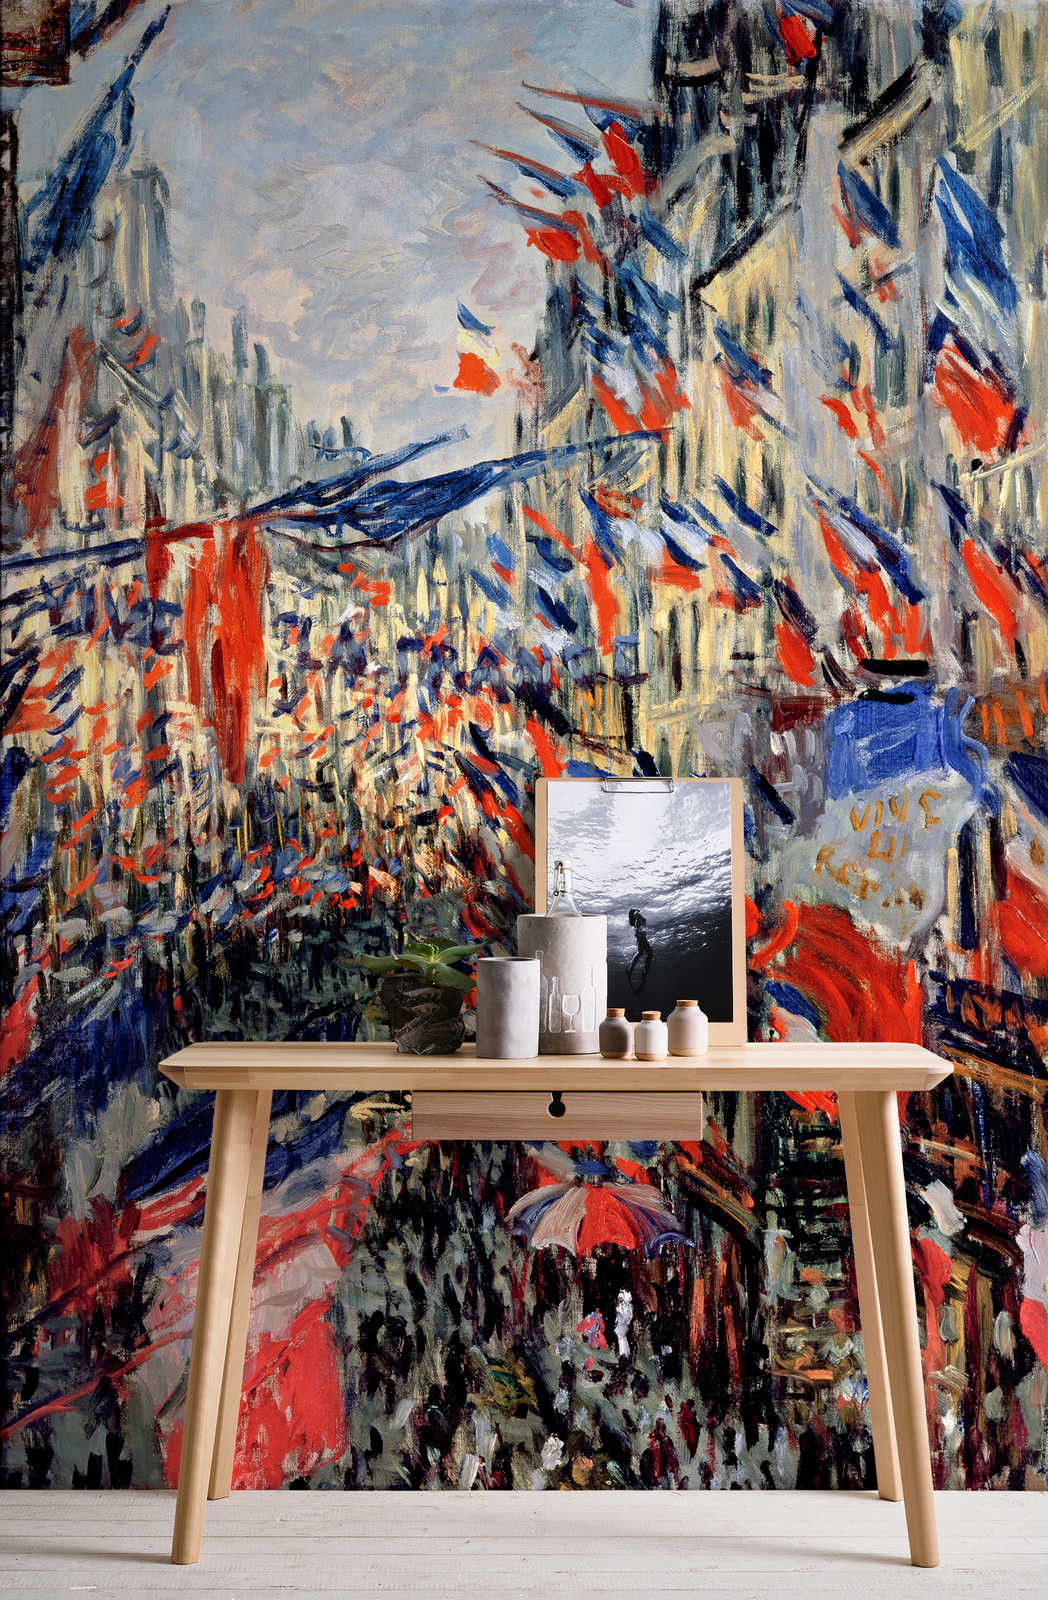             Mural "La calle Saint-Denis, celebraciones del 30 de junio" de Claude Monet
        